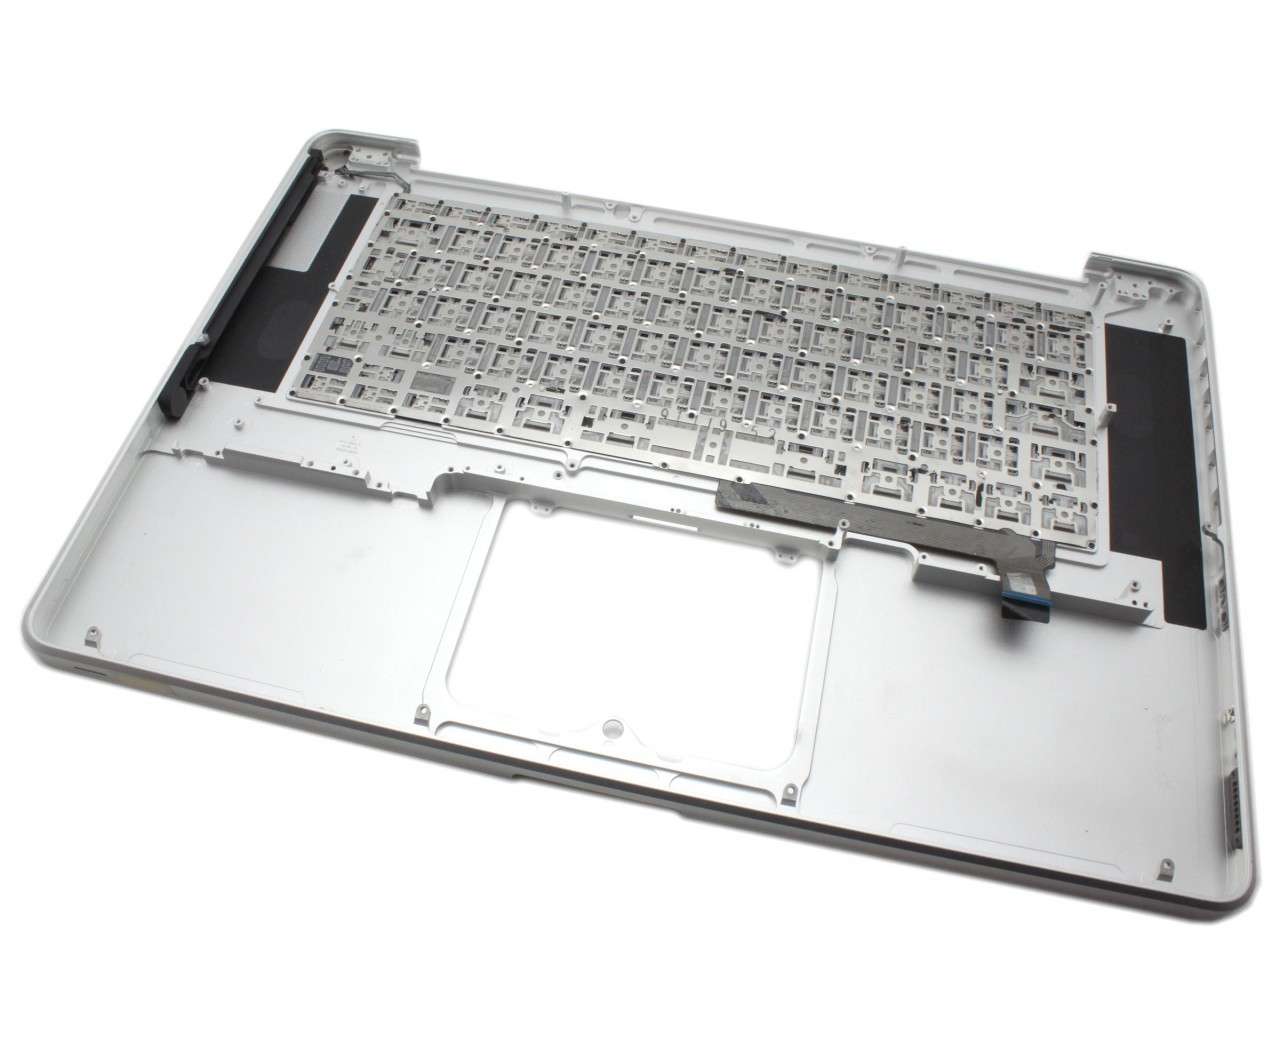 Tastatura Apple MacBook Pro 15 MC118 Neagra cu Palmrest Argintiu Refurbished Apple Apple